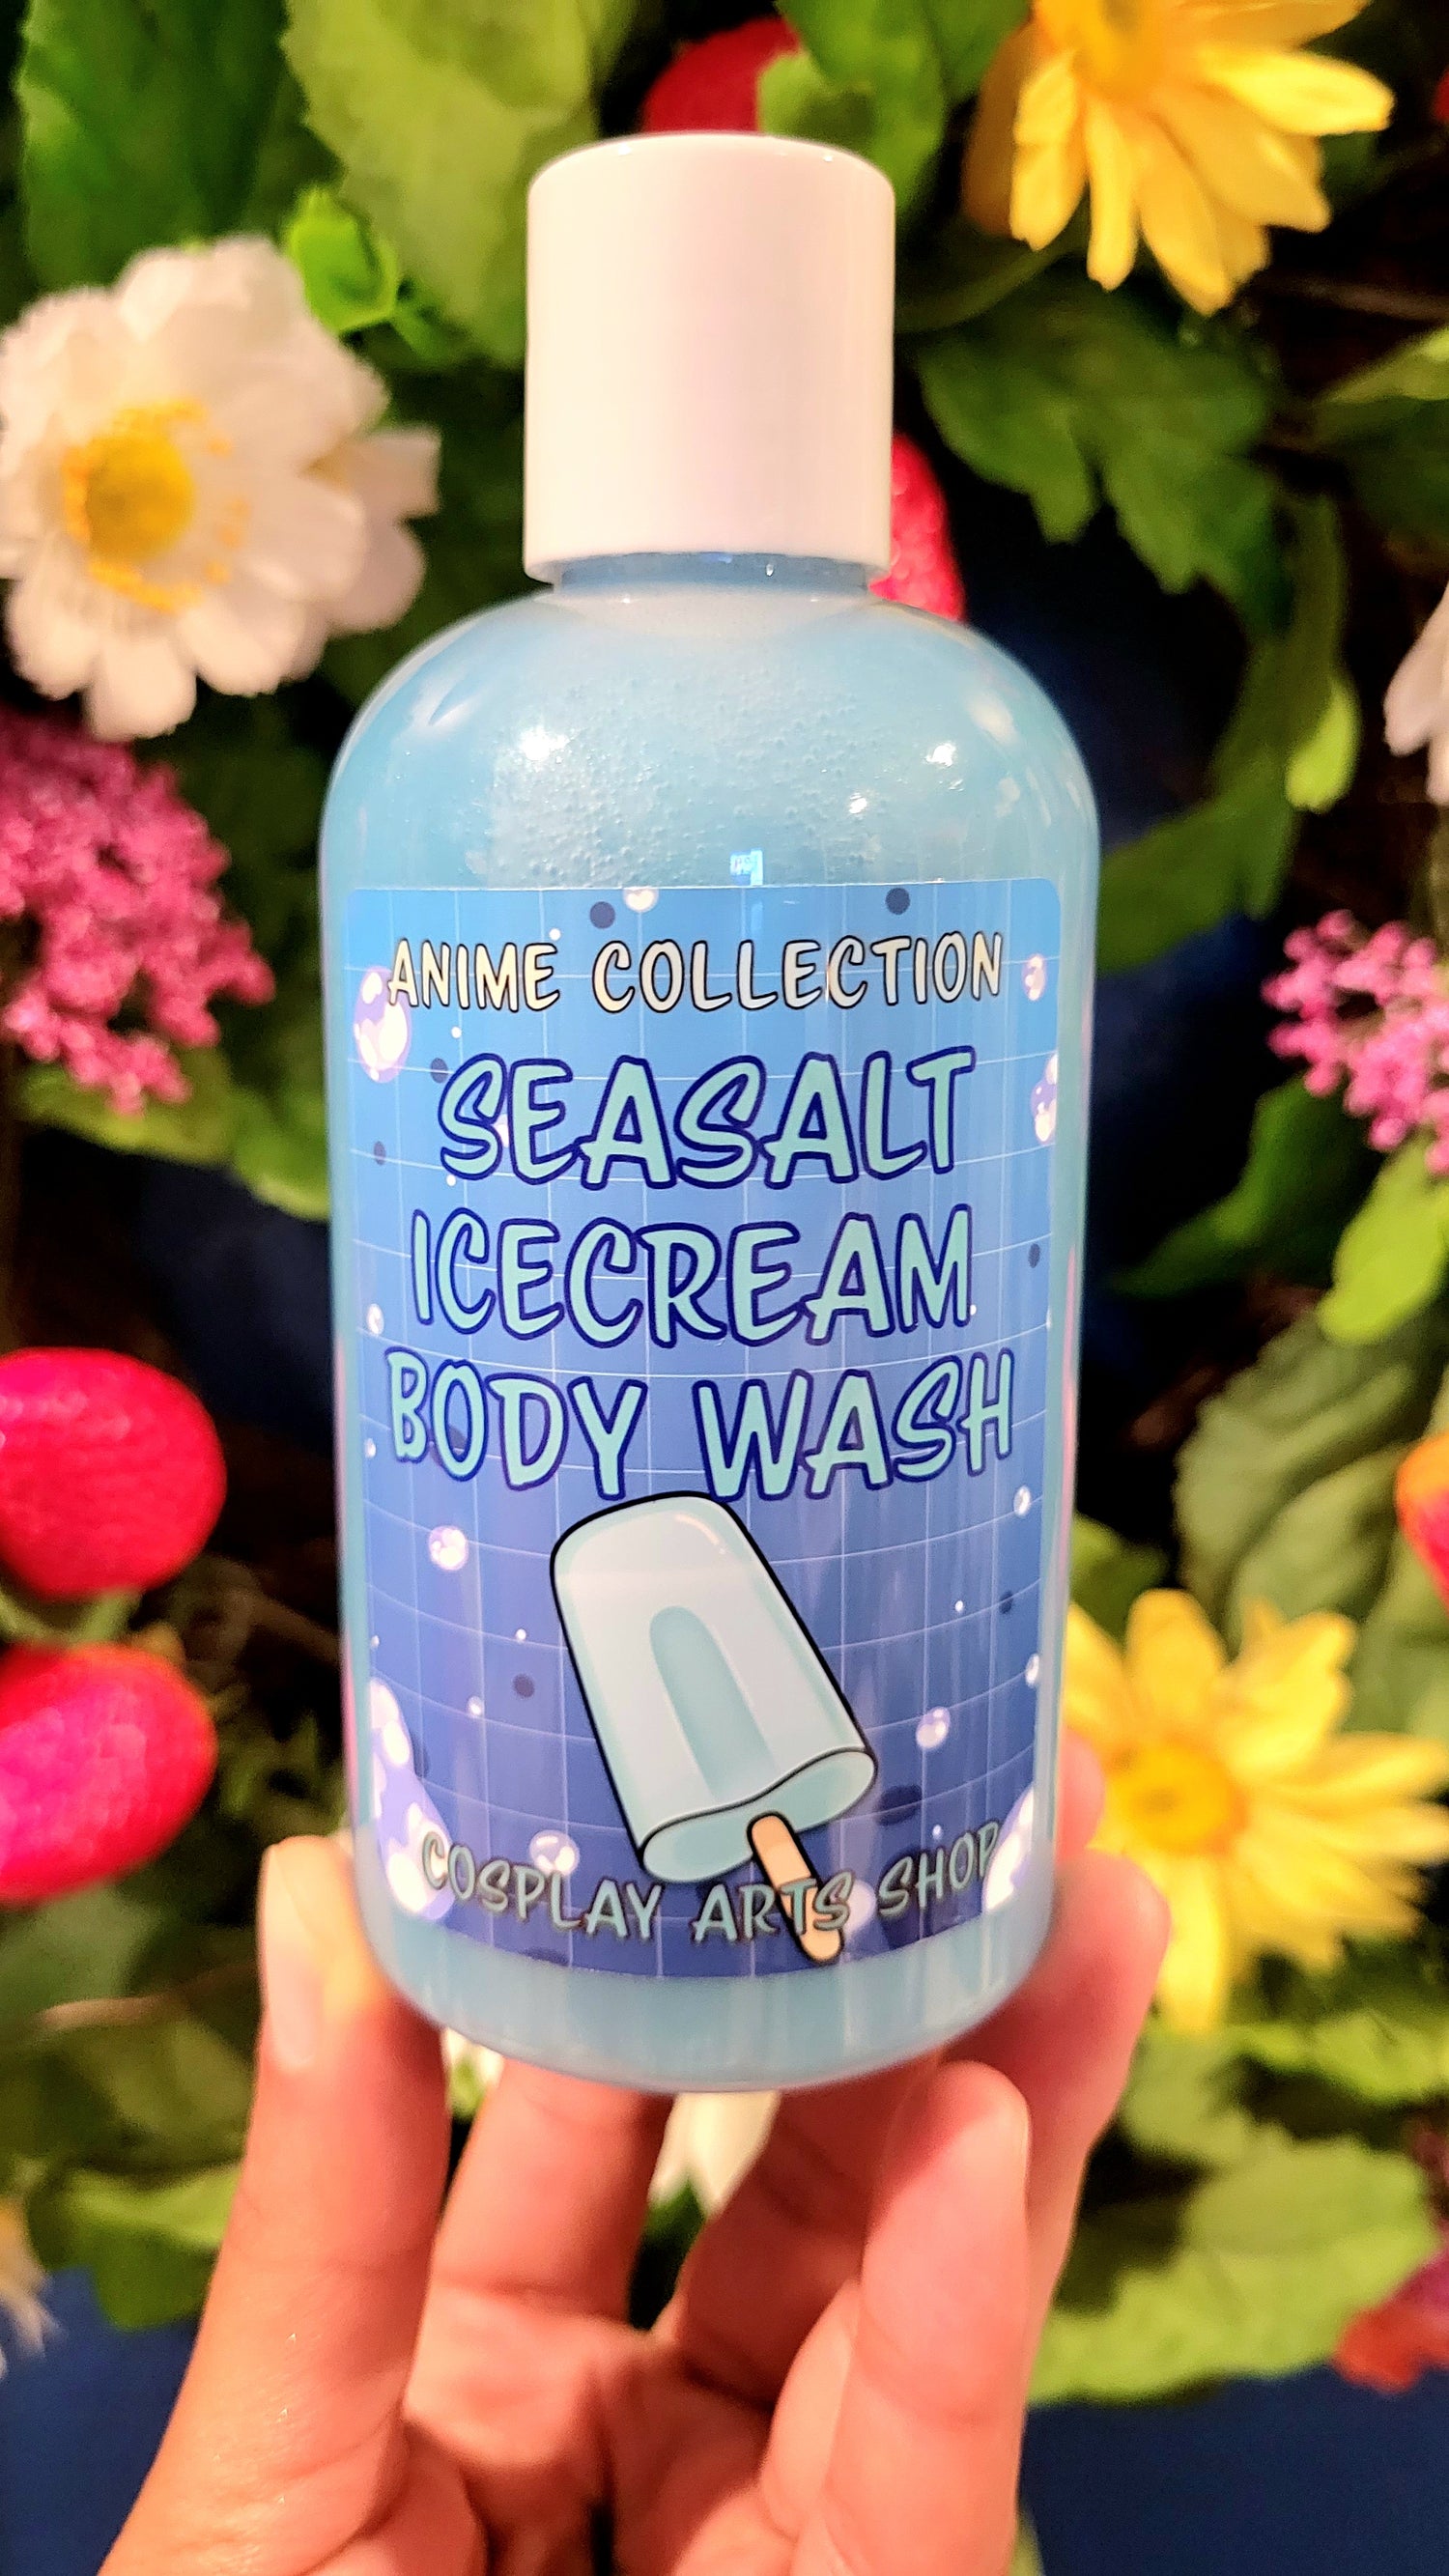 Sea Salt Ice Cream Body Wash - Cosplay Arts Shop